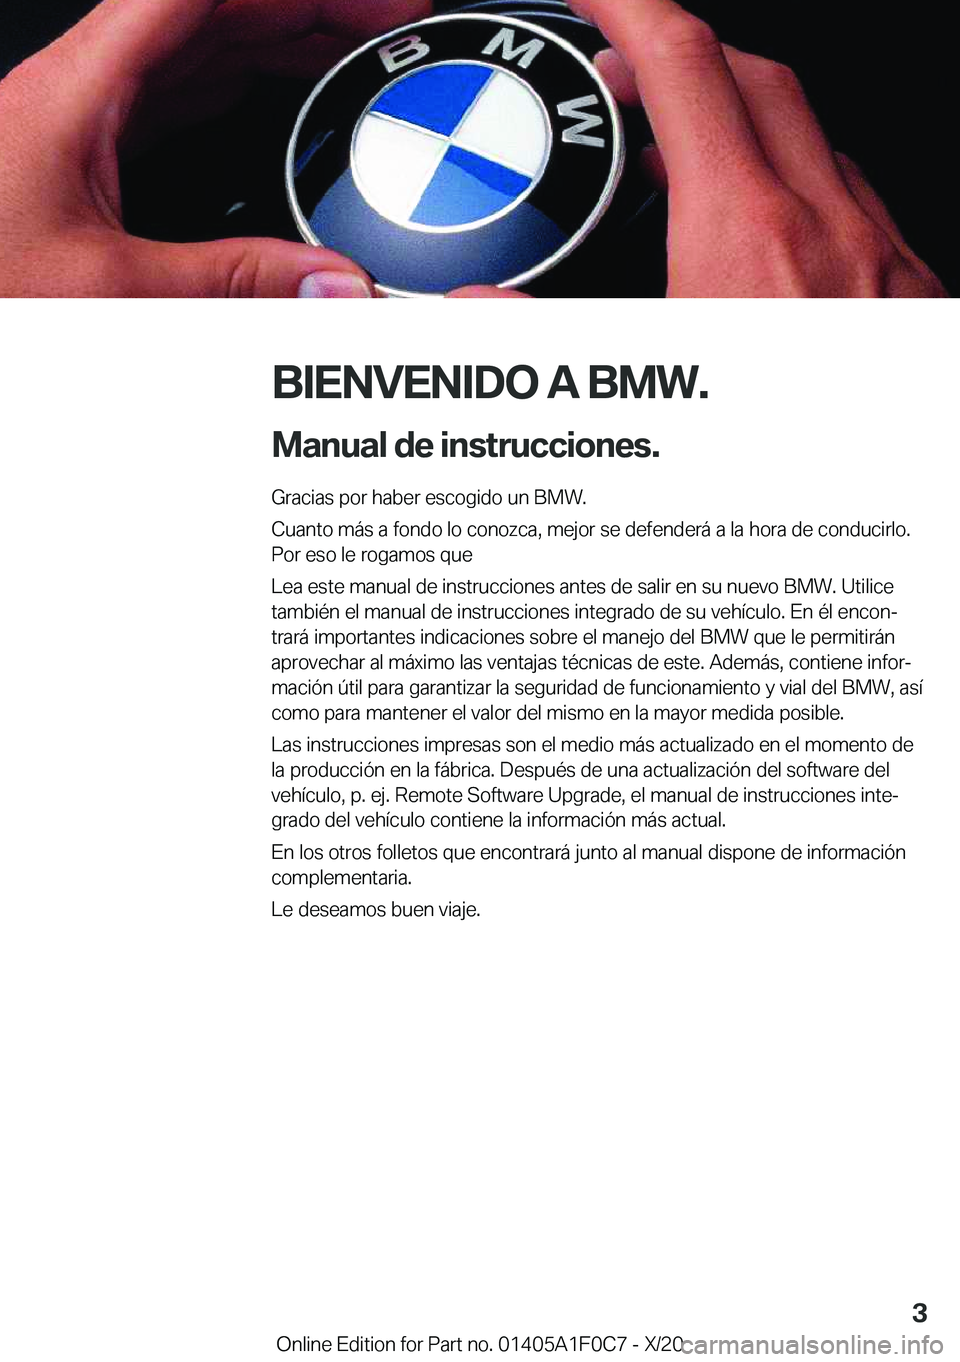 BMW X6 2021  Manuales de Empleo (in Spanish) �B�I�E�N�V�E�N�I�D�O��A��B�M�W�.
�M�a�n�u�a�l��d�e��i�n�s�t�r�u�c�c�i�o�n�e�s�. �G�r�a�c�i�a�s��p�o�r��h�a�b�e�r��e�s�c�o�g�i�d�o��u�n��B�M�W�.
�C�u�a�n�t�o��m�